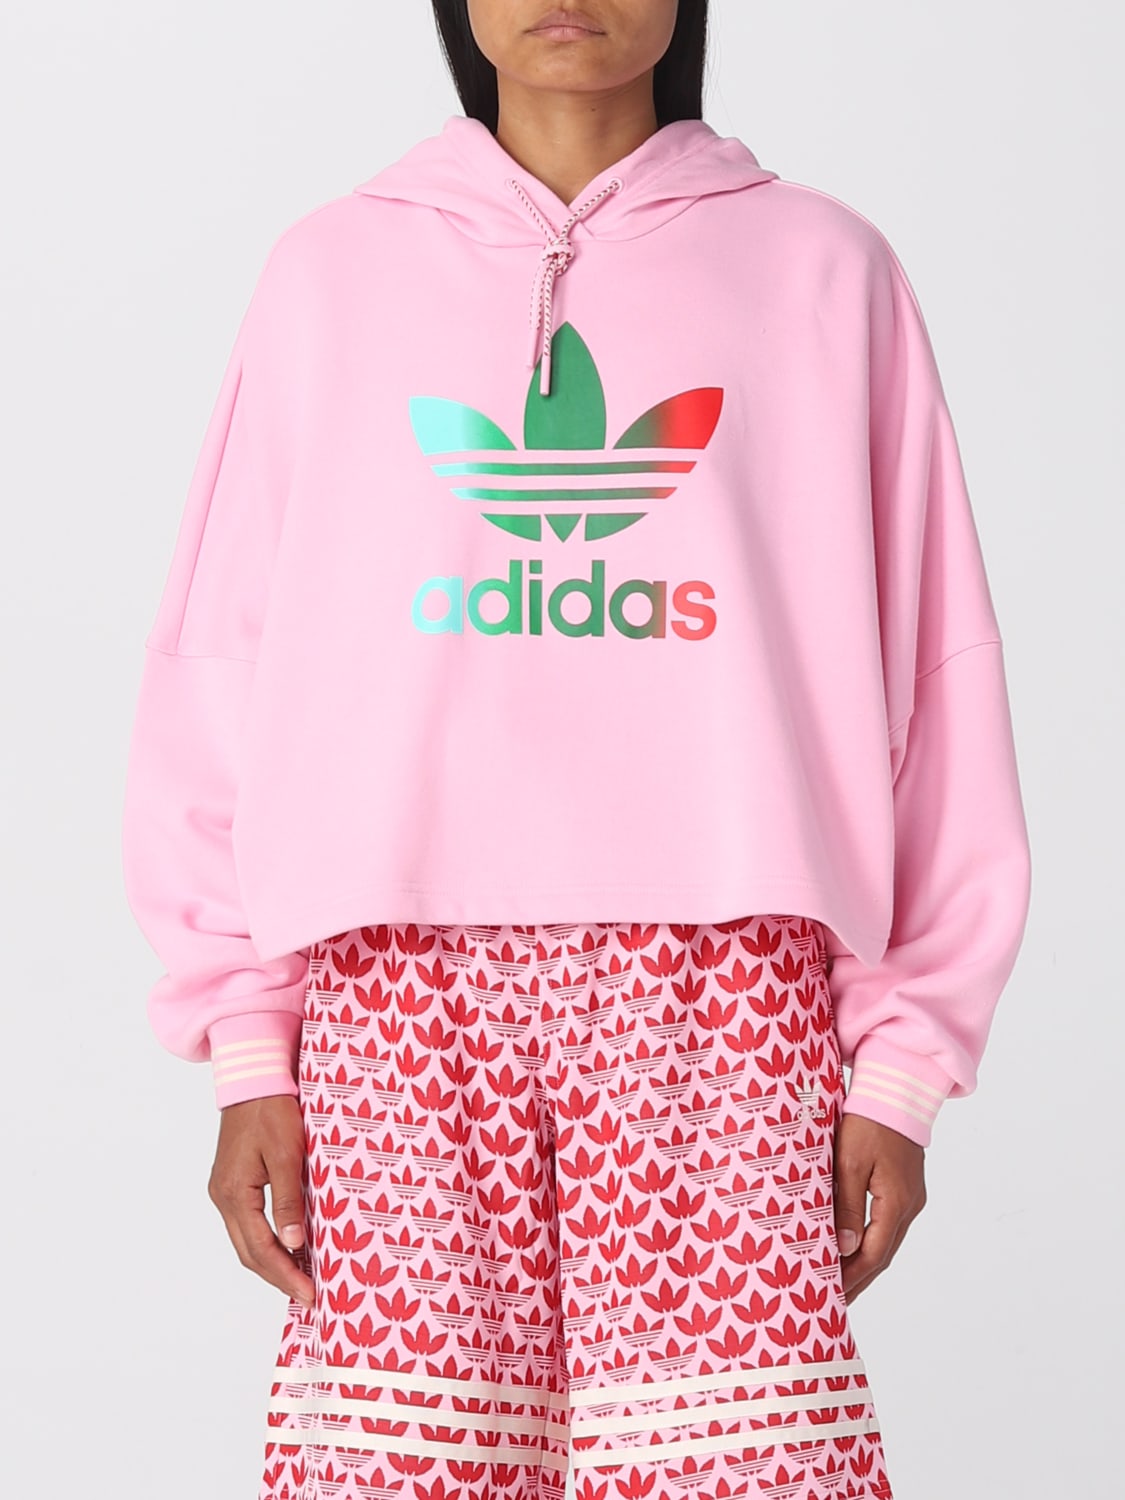 Suri Rode datum halen ADIDAS ORIGINALS: Damen Sweatshirt - Pink | Adidas Originals Sweatshirt  IK7863 online auf GIGLIO.COM